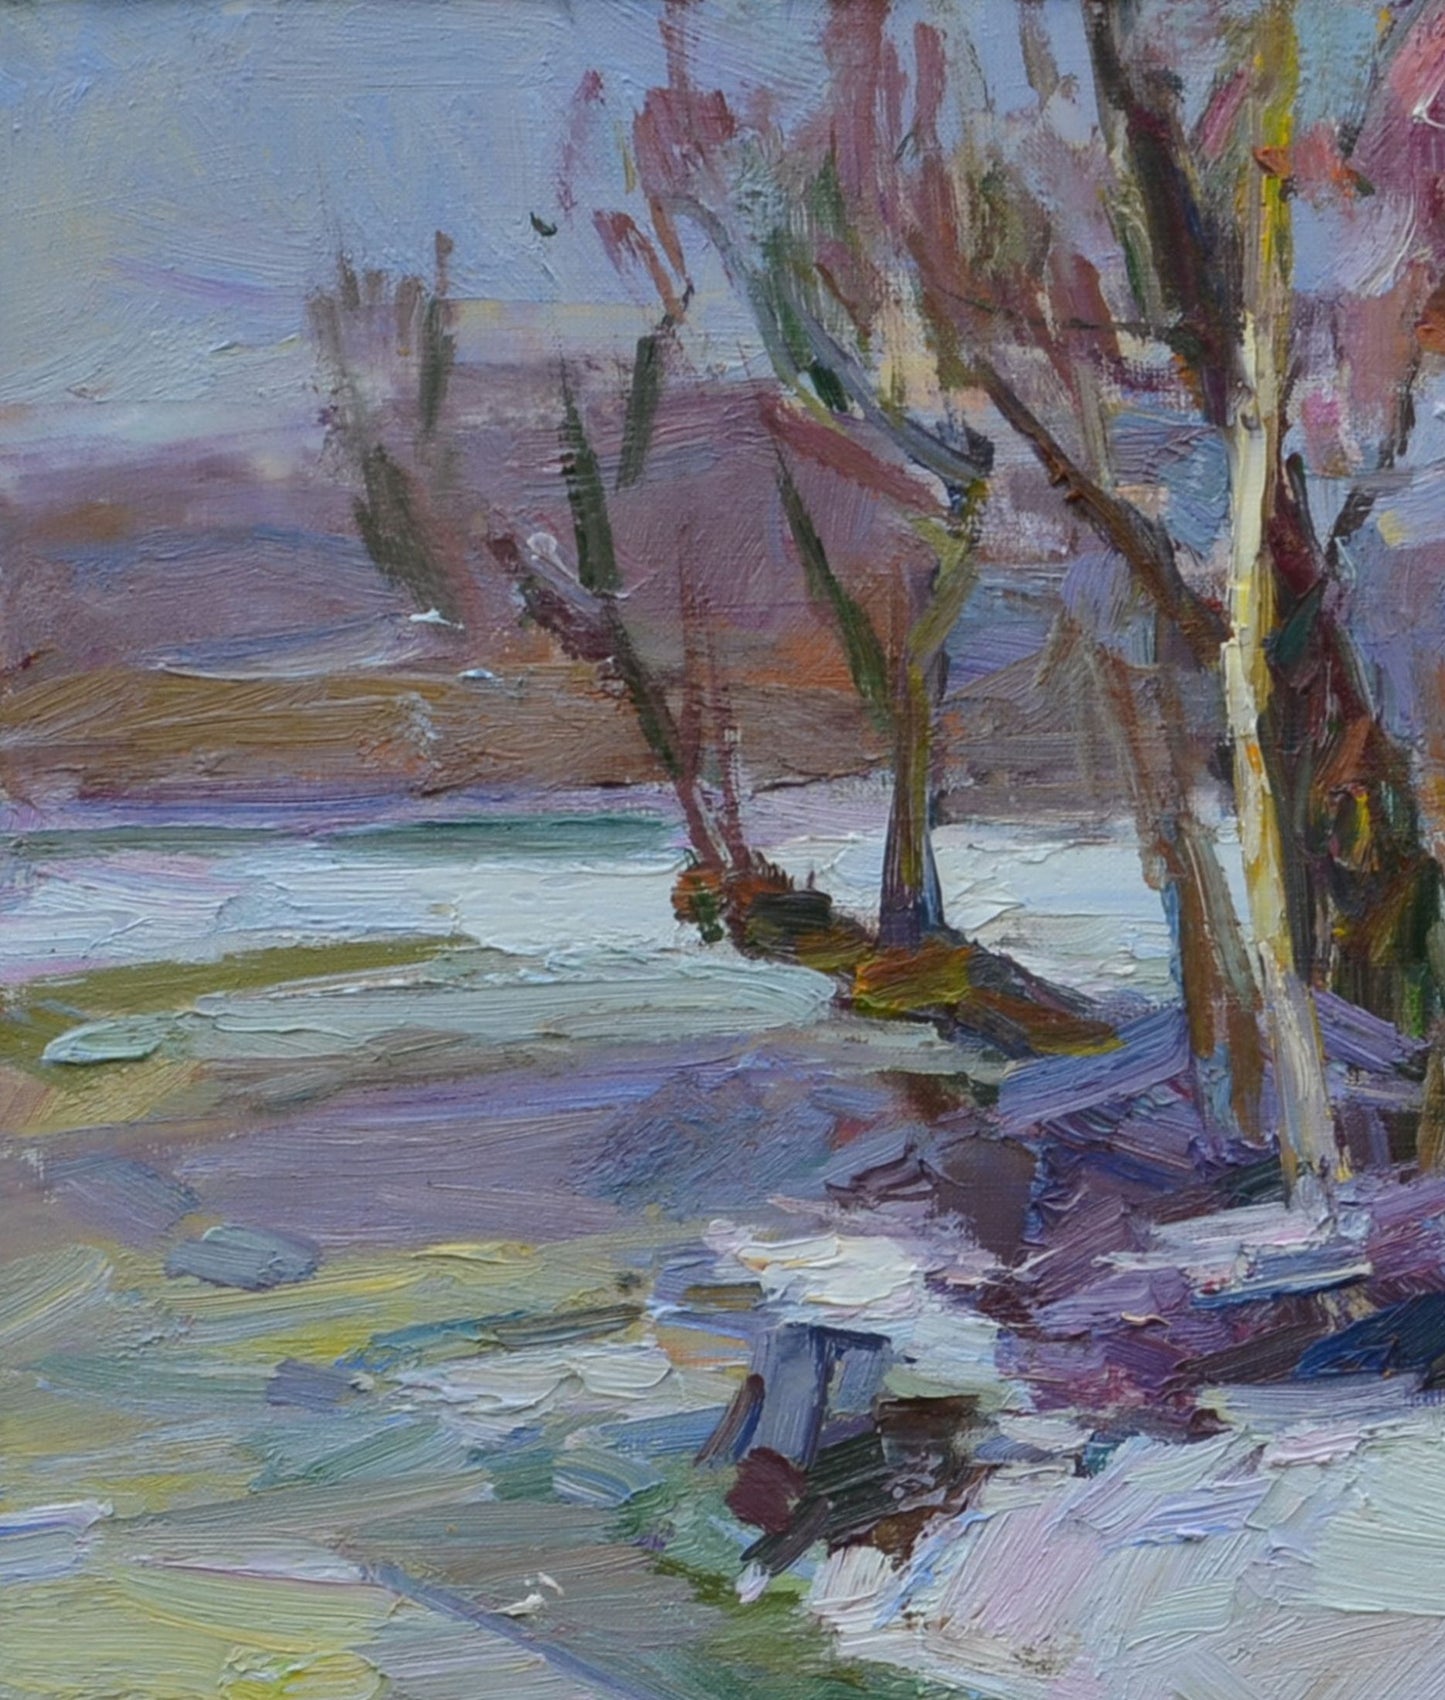 Pereta Vyacheslav's oil painting captures the riverside